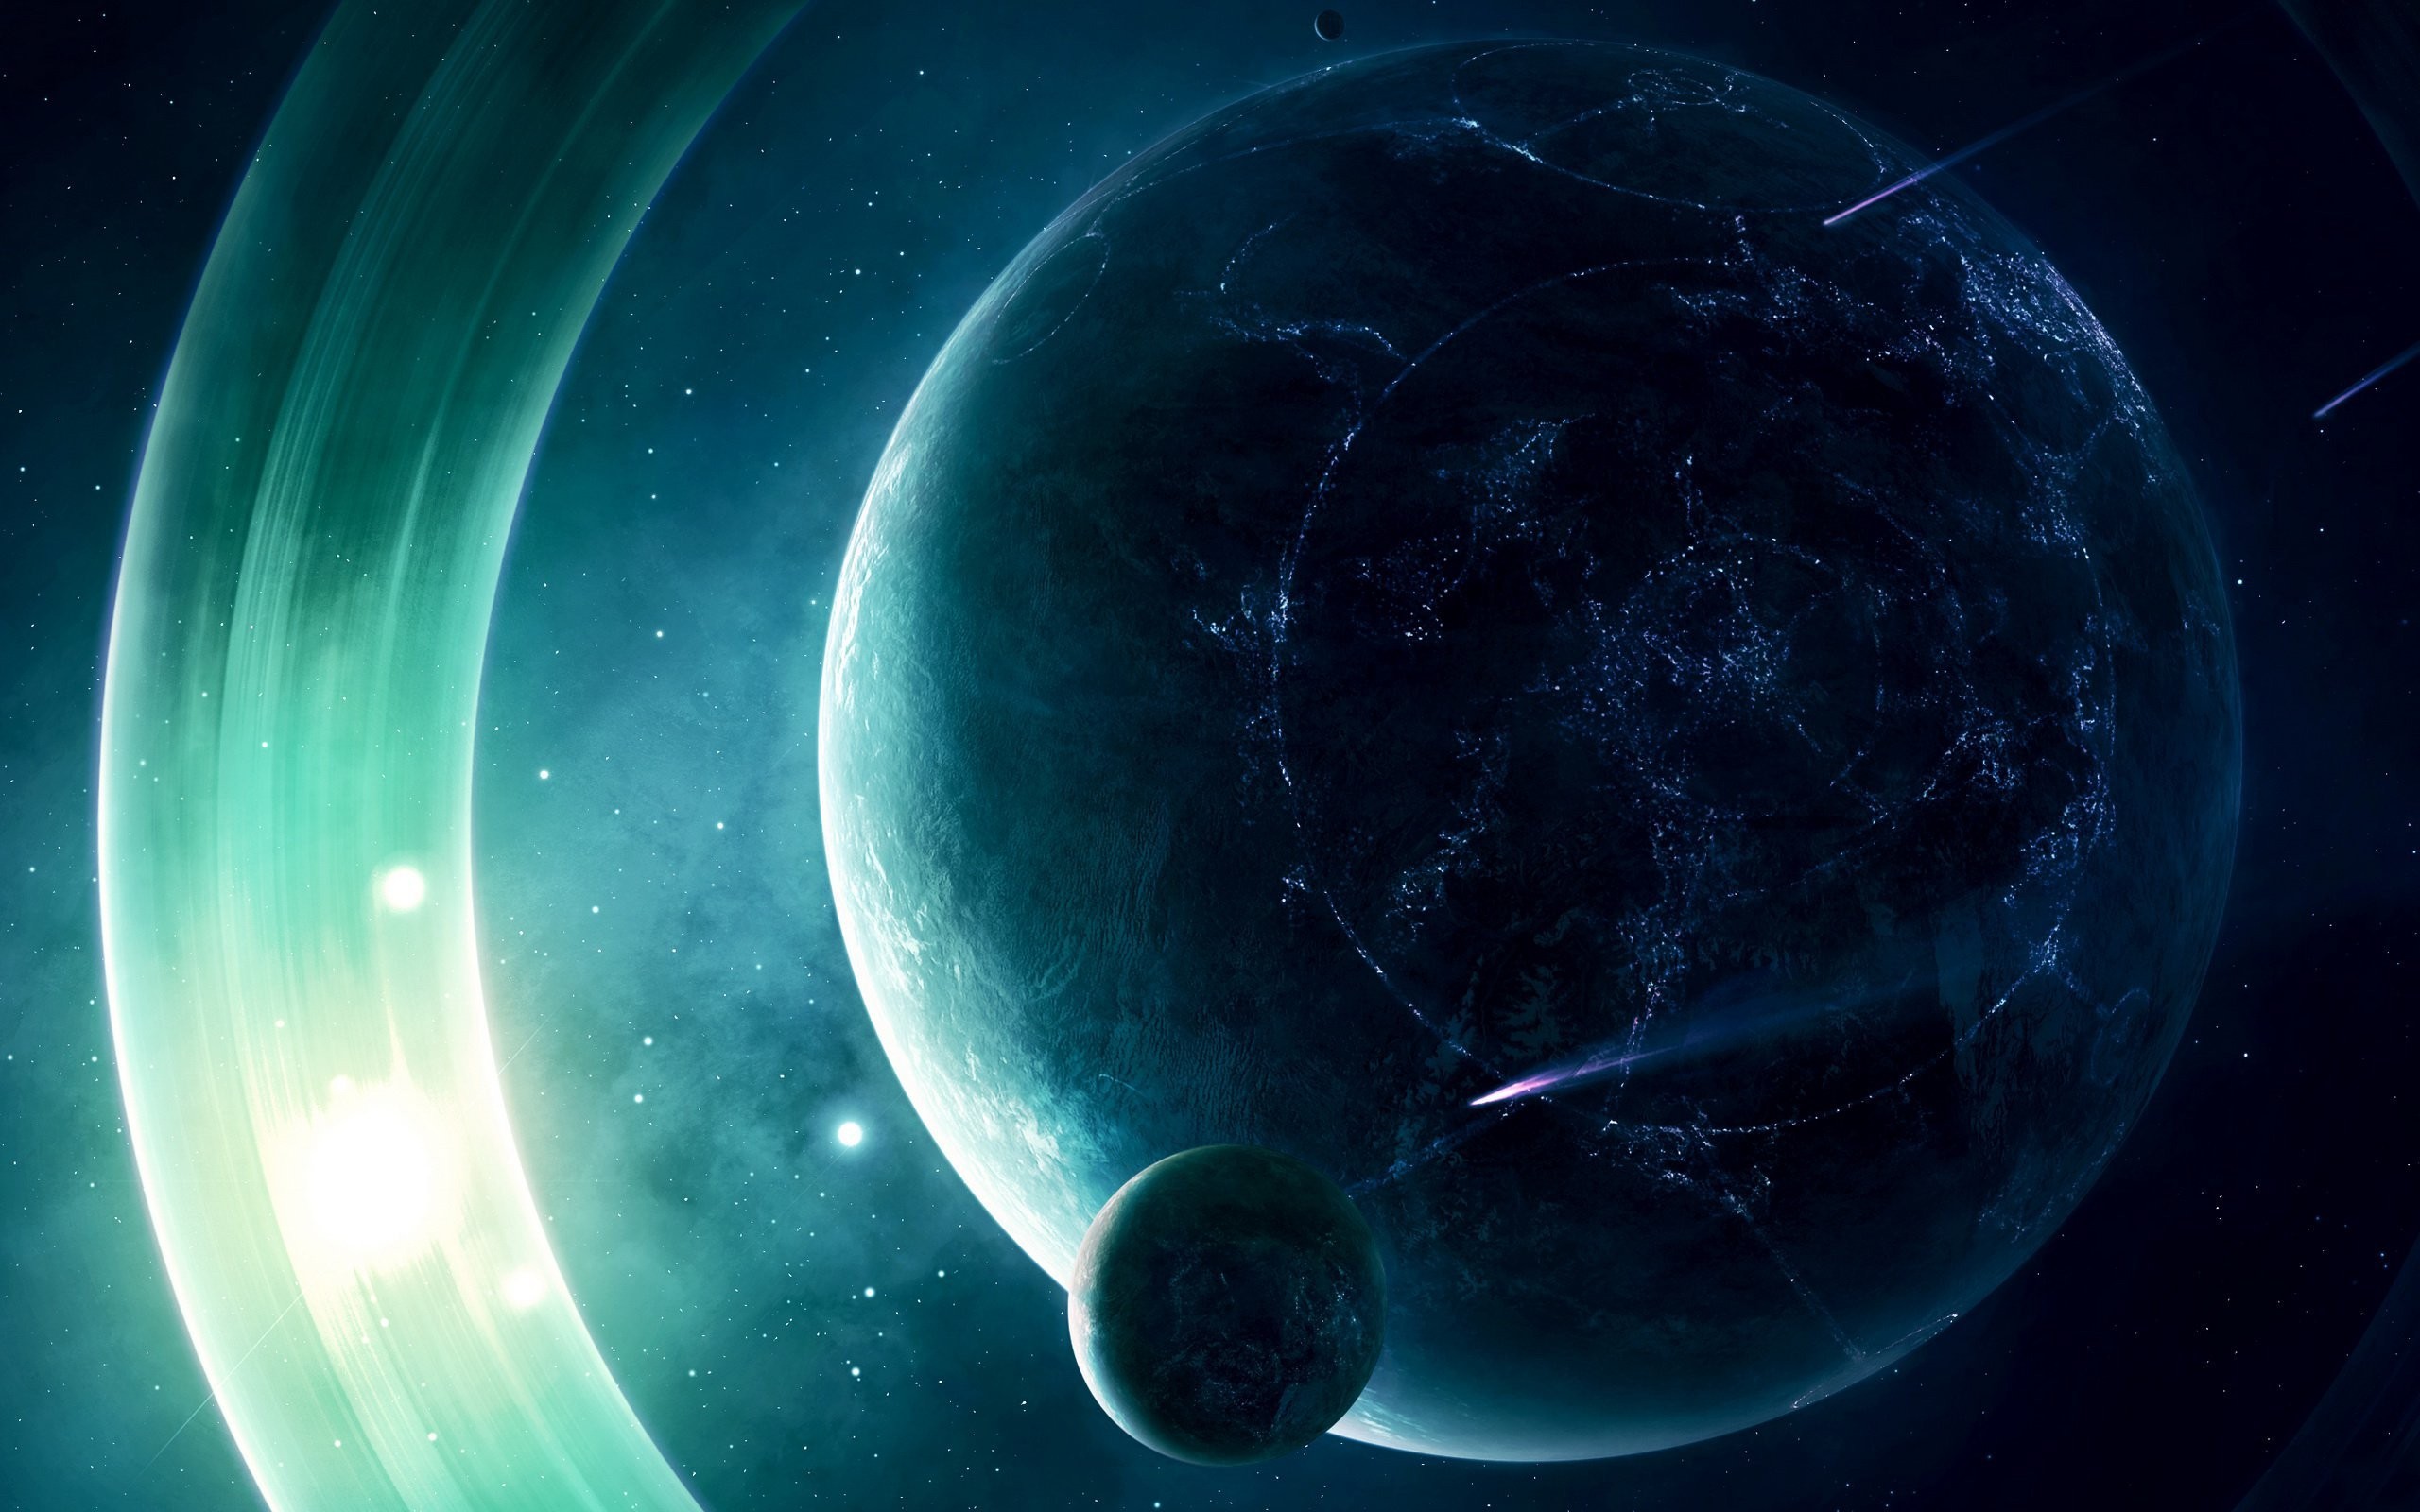 Hd Wallpaper Of An Alien Colony Mac Pc - Futuristic Sci Fi Planet - HD Wallpaper 